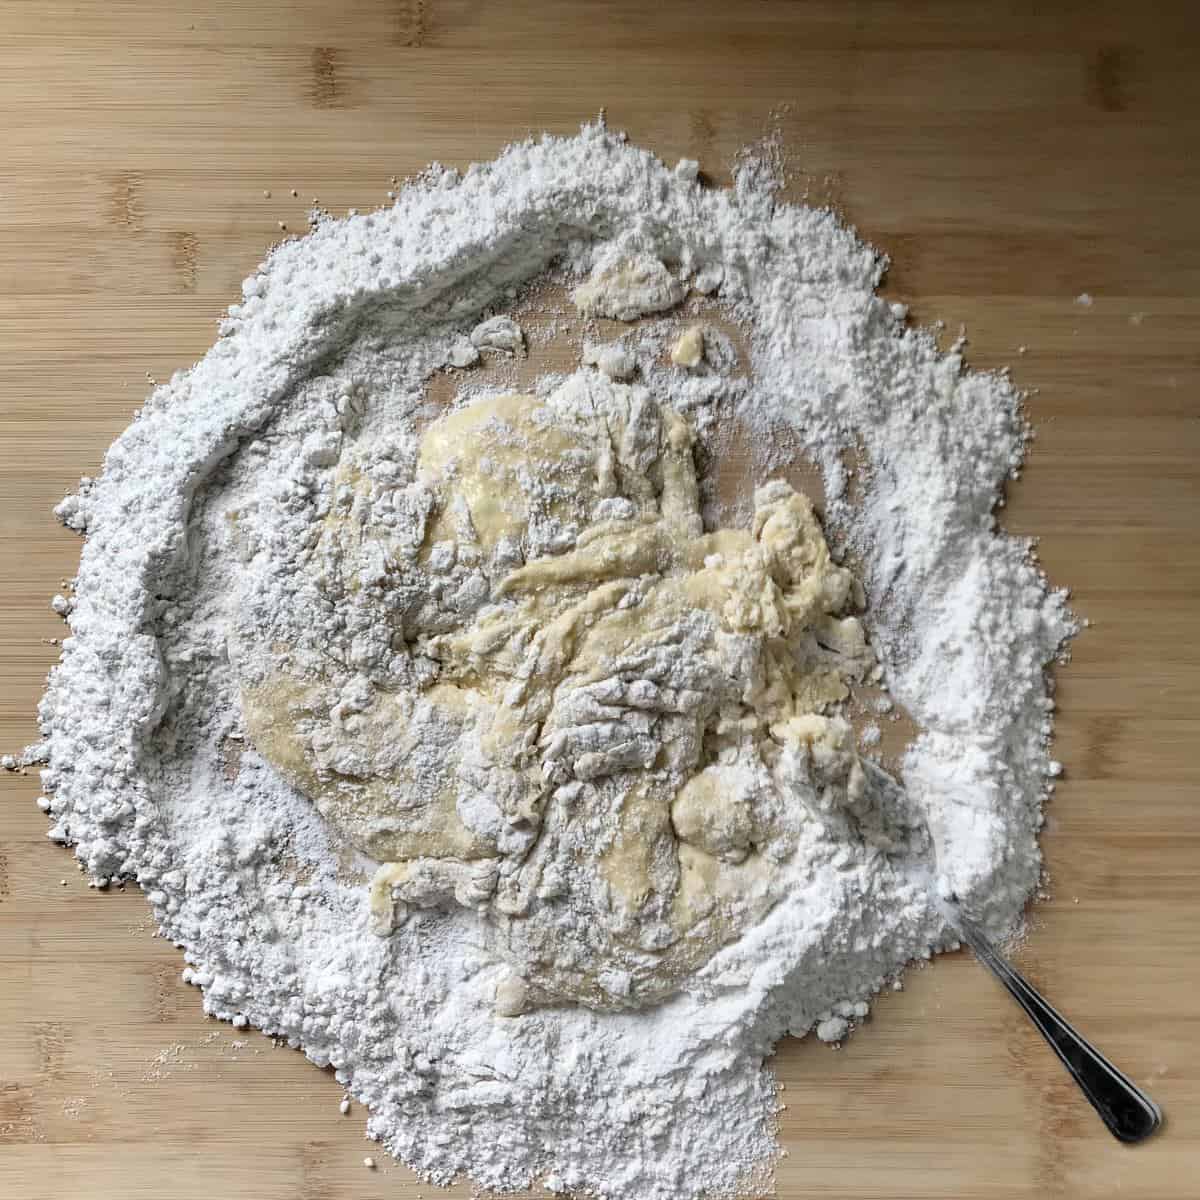 The dough to make struffoli on a wooden board.